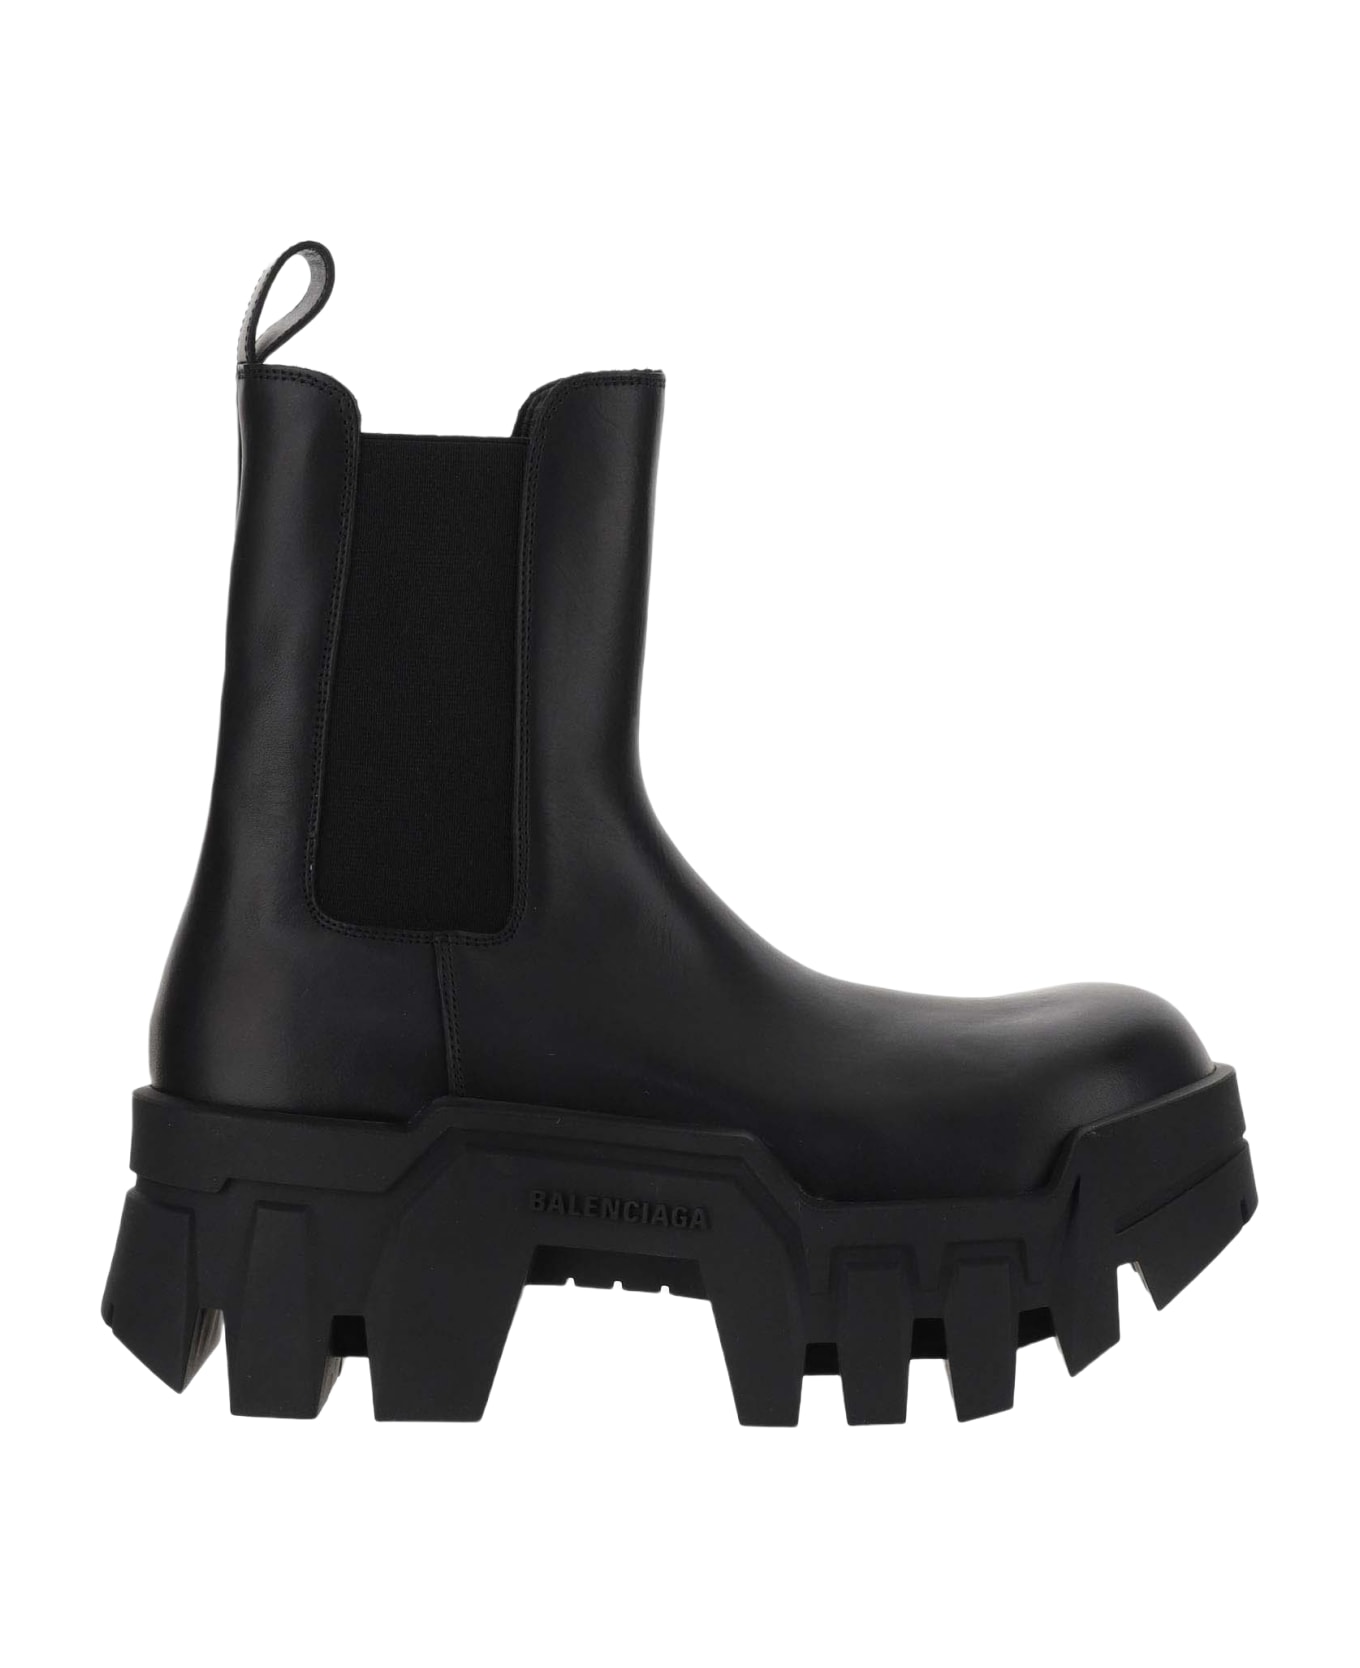 Balenciaga Bulldozer Leather Chelsea Boots - Black ブーツ